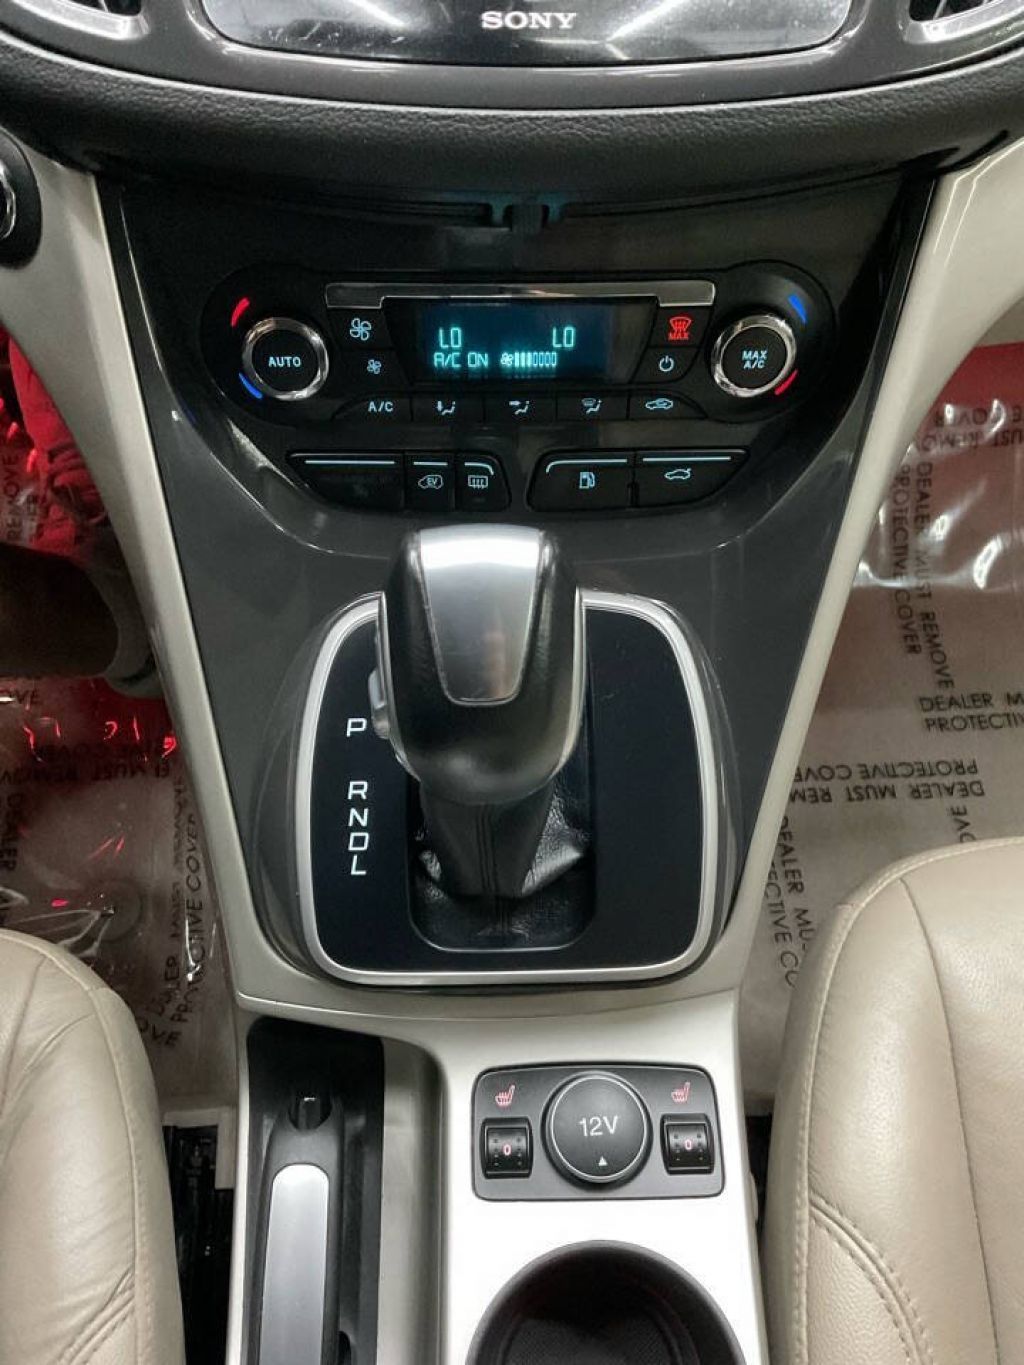 2015 Ford C-Max Energi